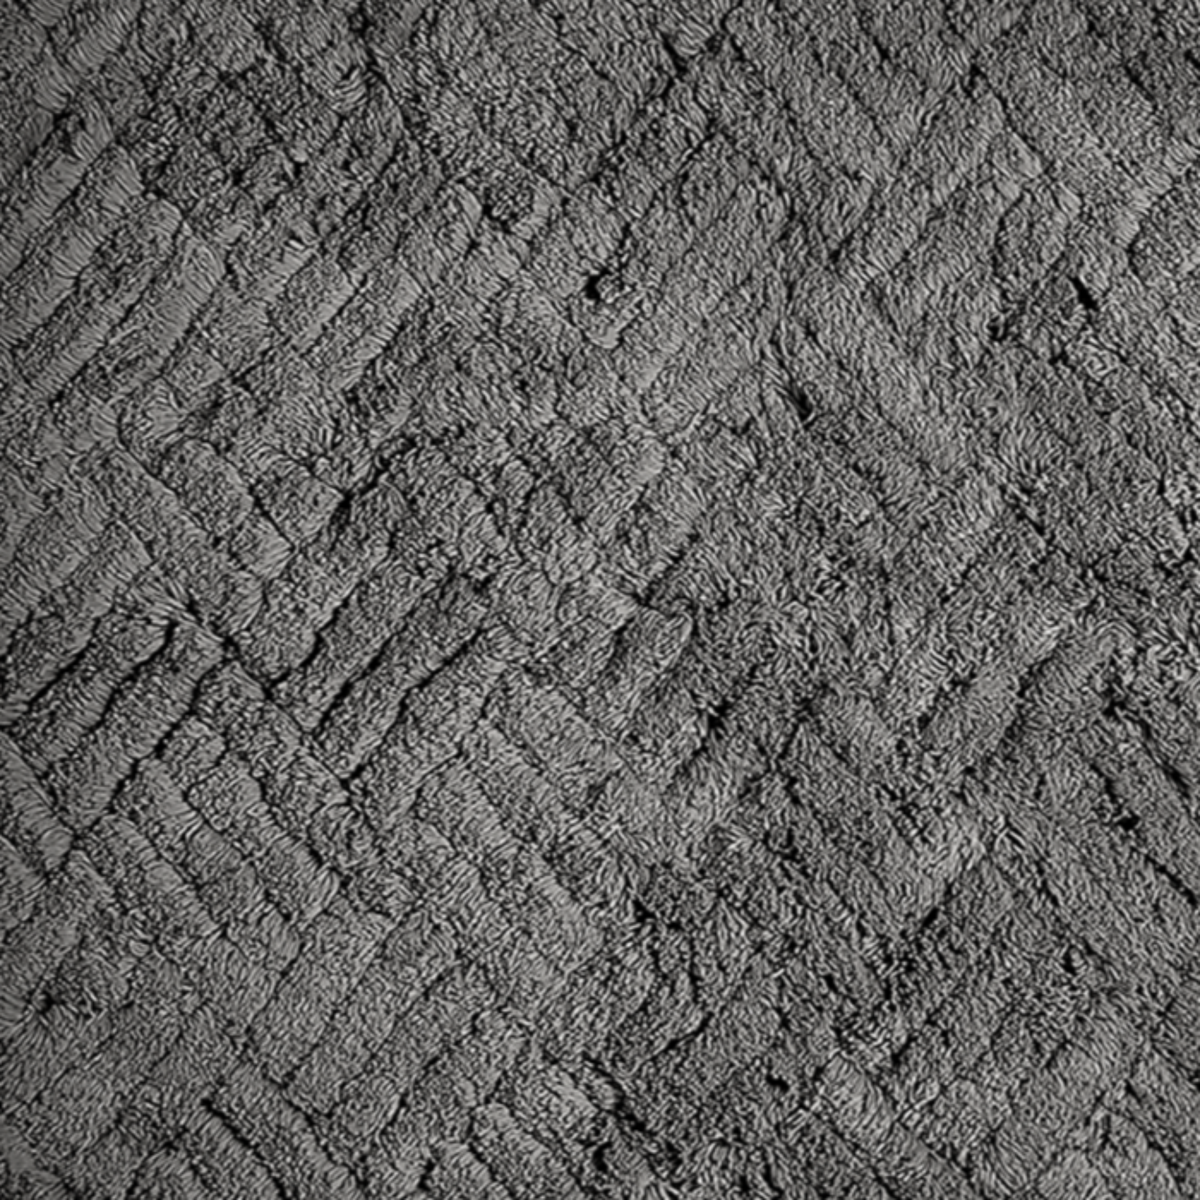 Swatch Sample of Matouk Cairo Bath Rugs Smoke Gray Color